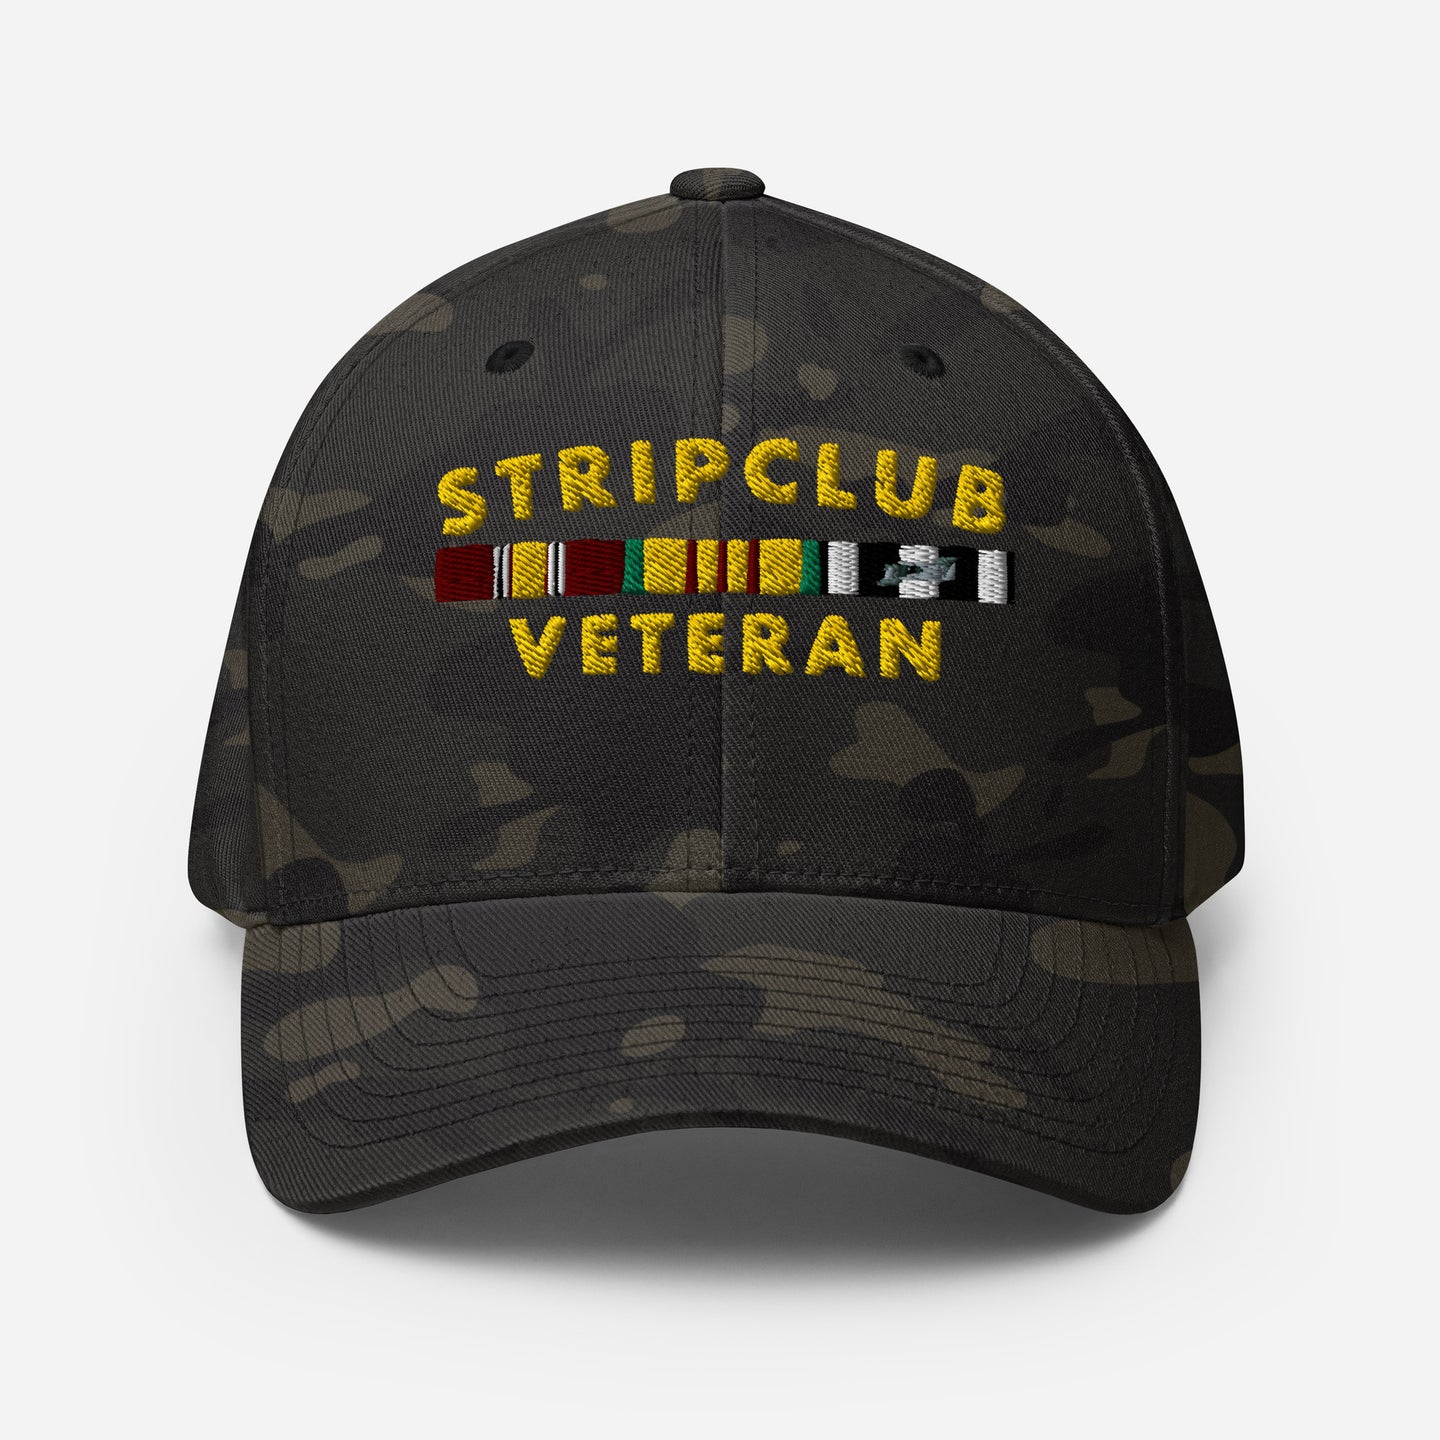 Strip Club Veteran Hat